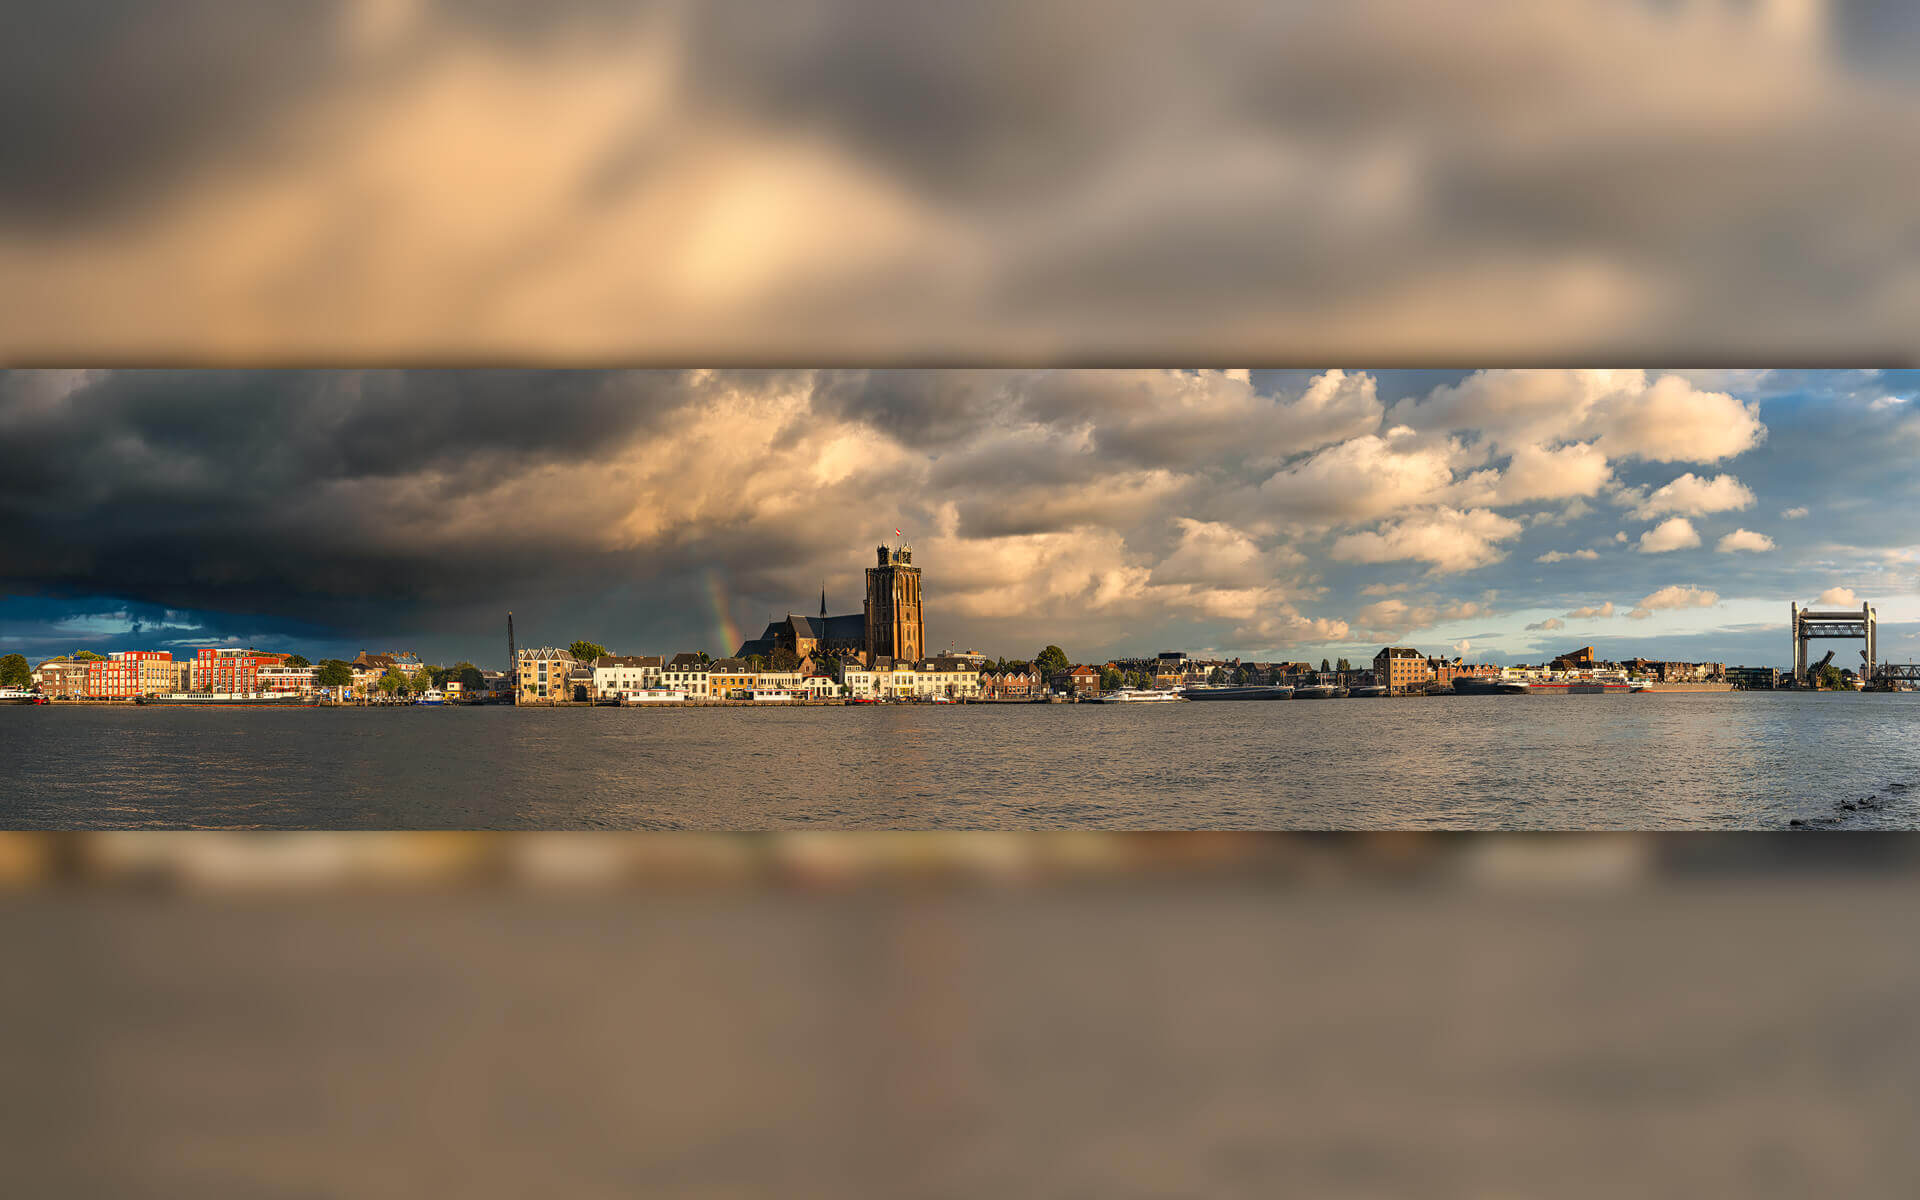 Panorama Dordrecht